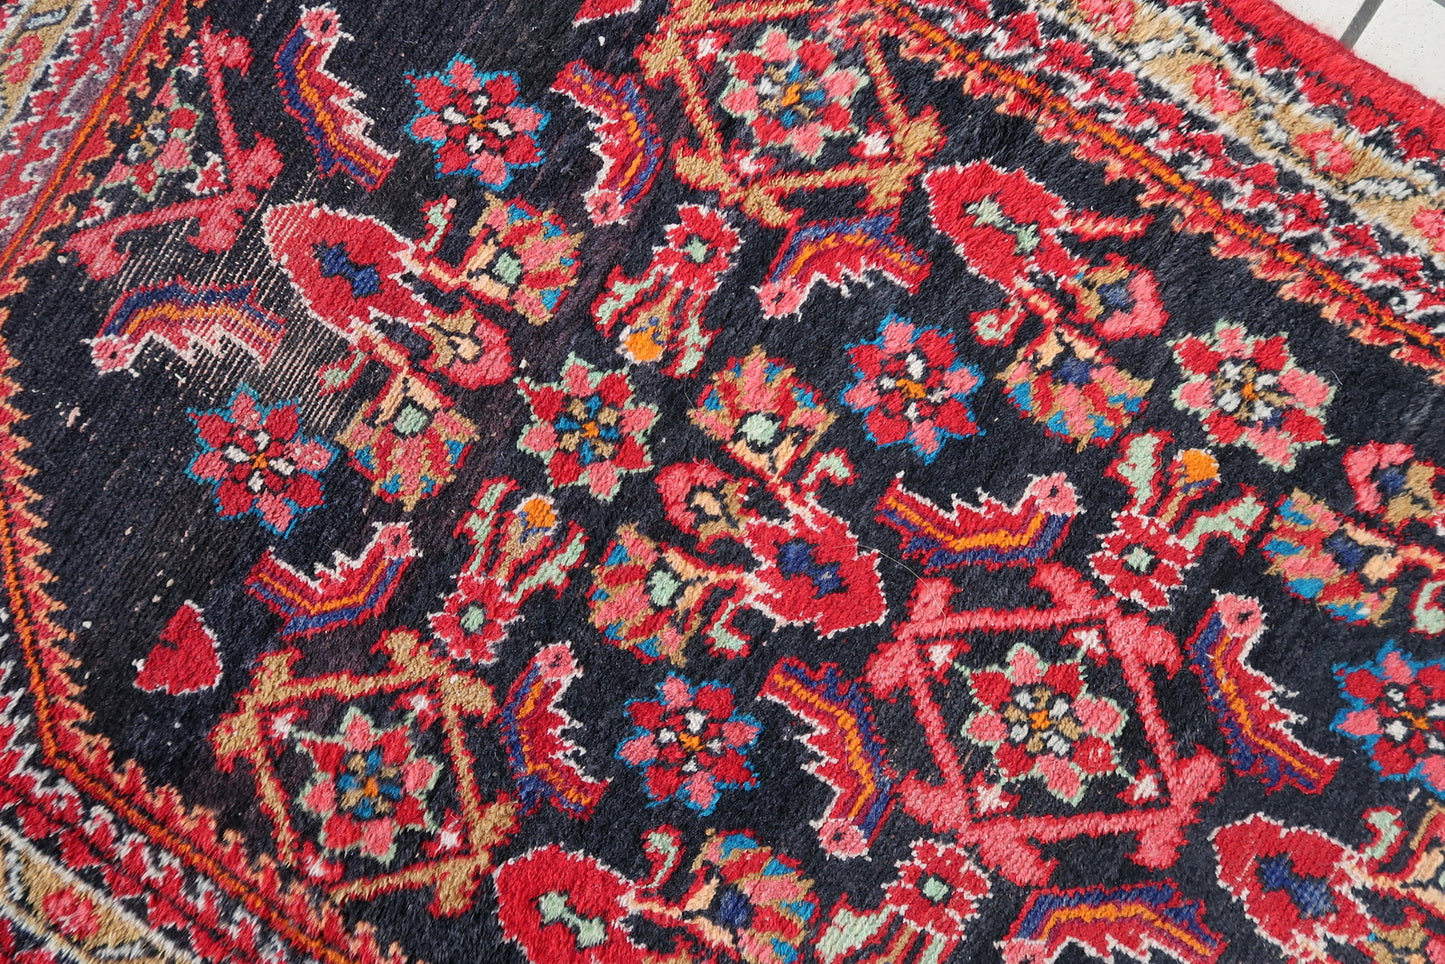 Close-up of black color on Handmade Vintage Persian Hamadan Rug - Detailed view showcasing the deep black tones.